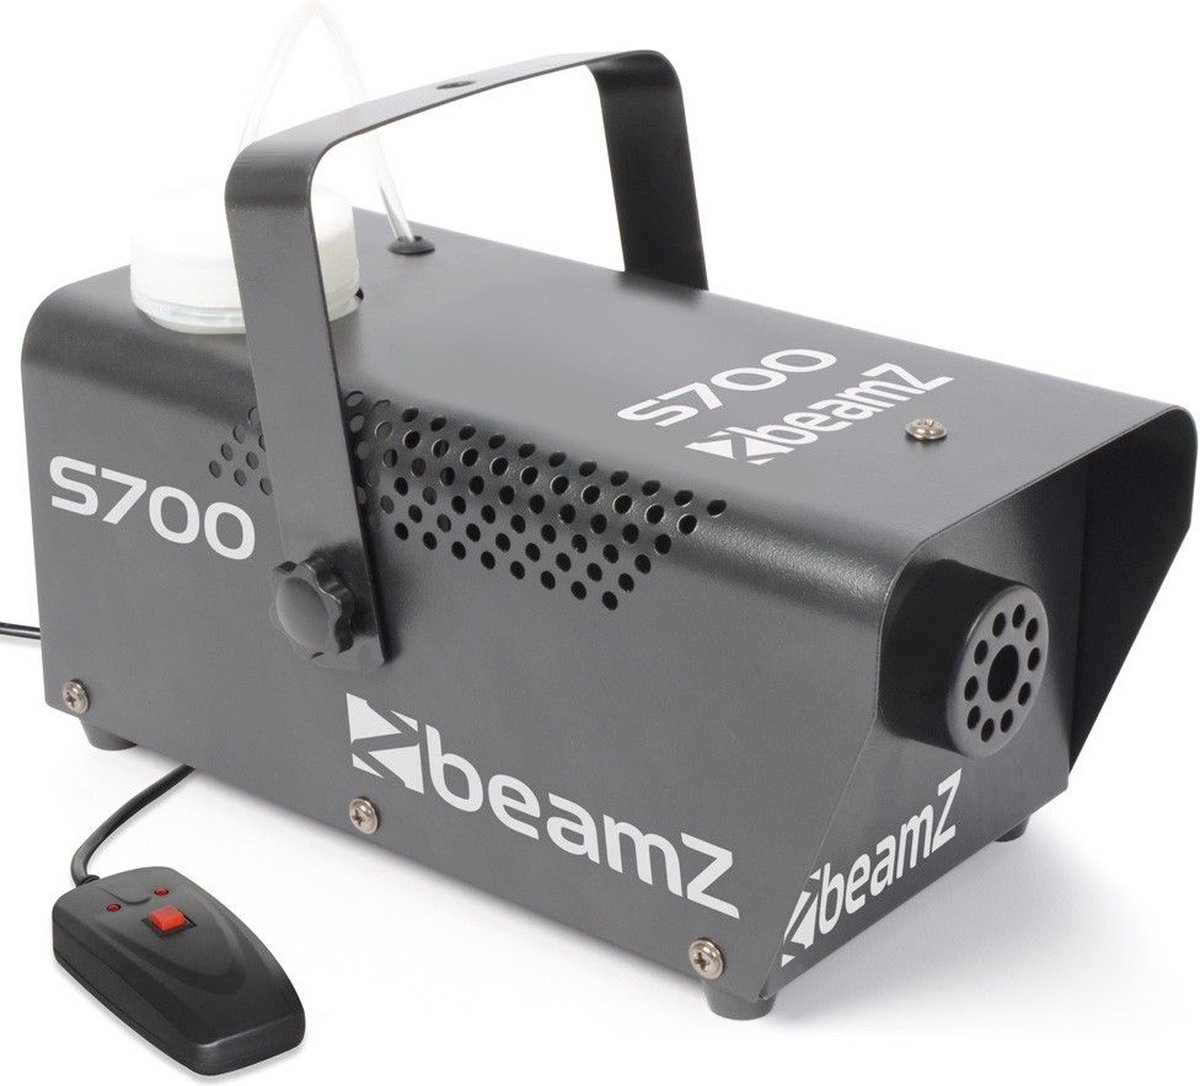 Rookmachine - Beamz S700 rookmachine 700W incl. 400ml rookvloeistof - BeamZ